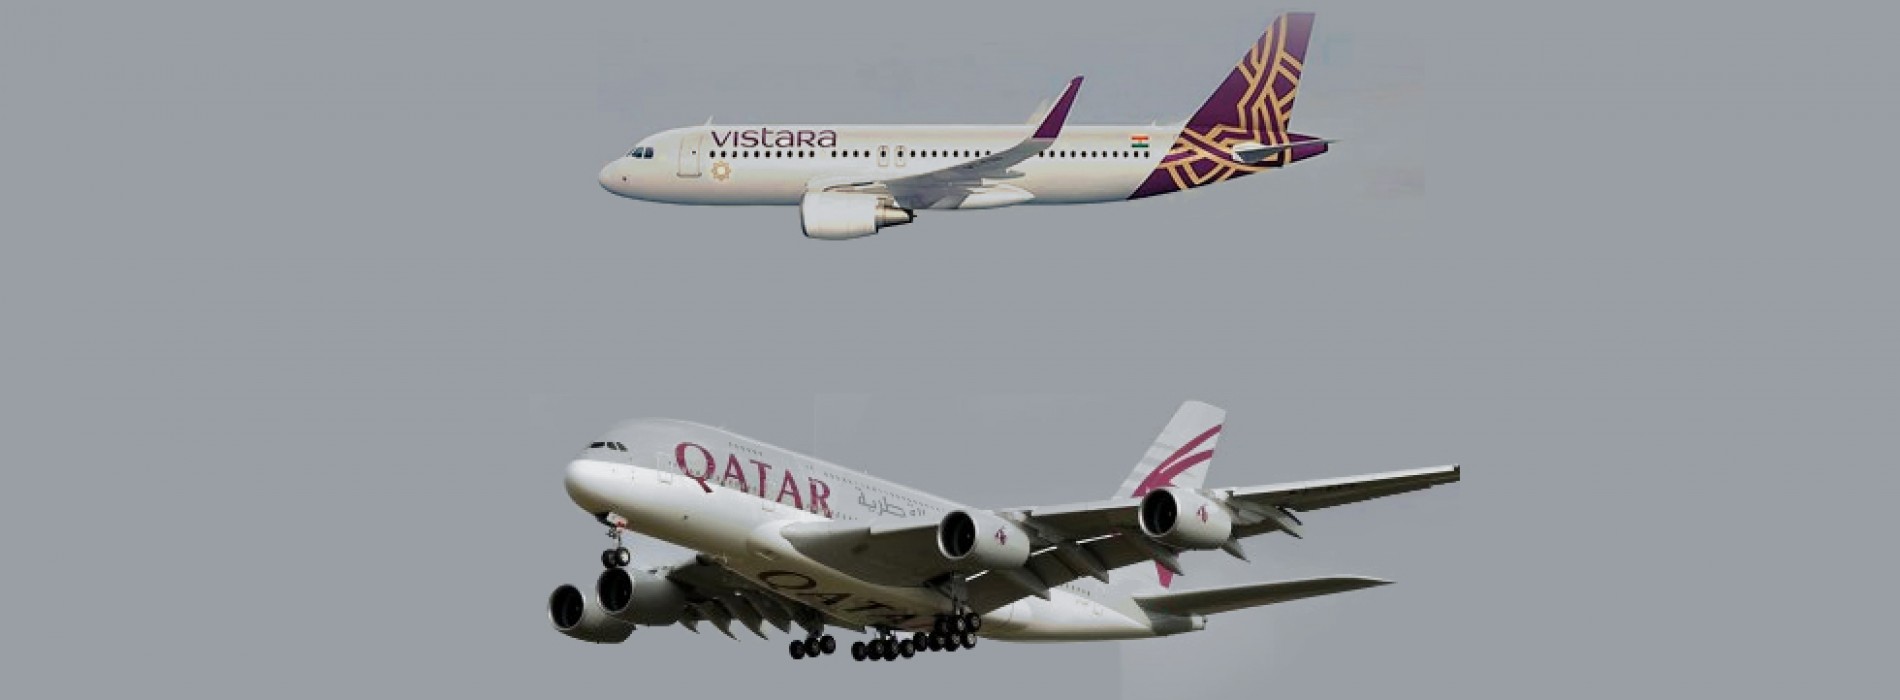 Qatar Airways and Vistara in interline partnership pact